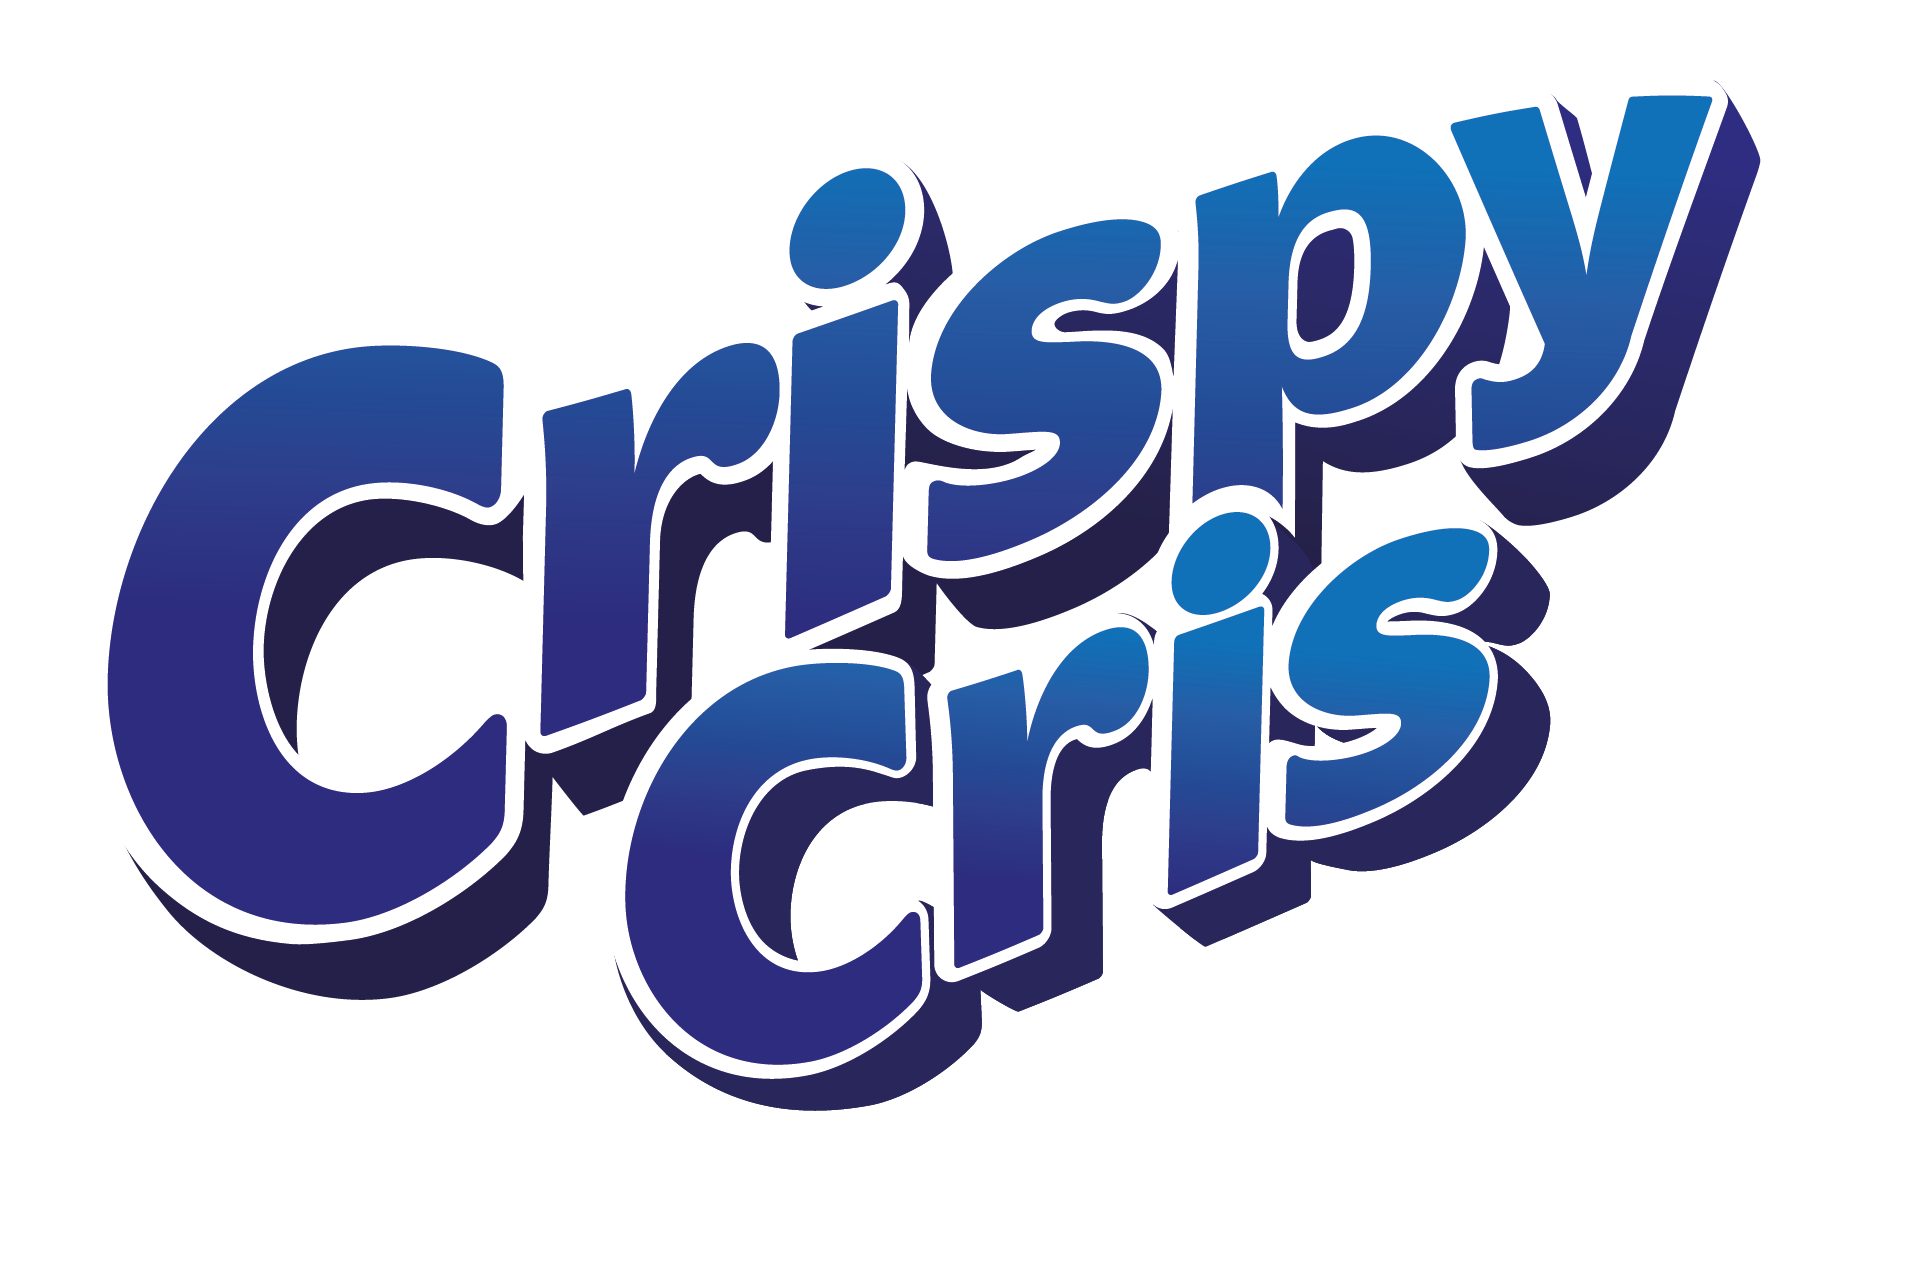 Crispy Cris